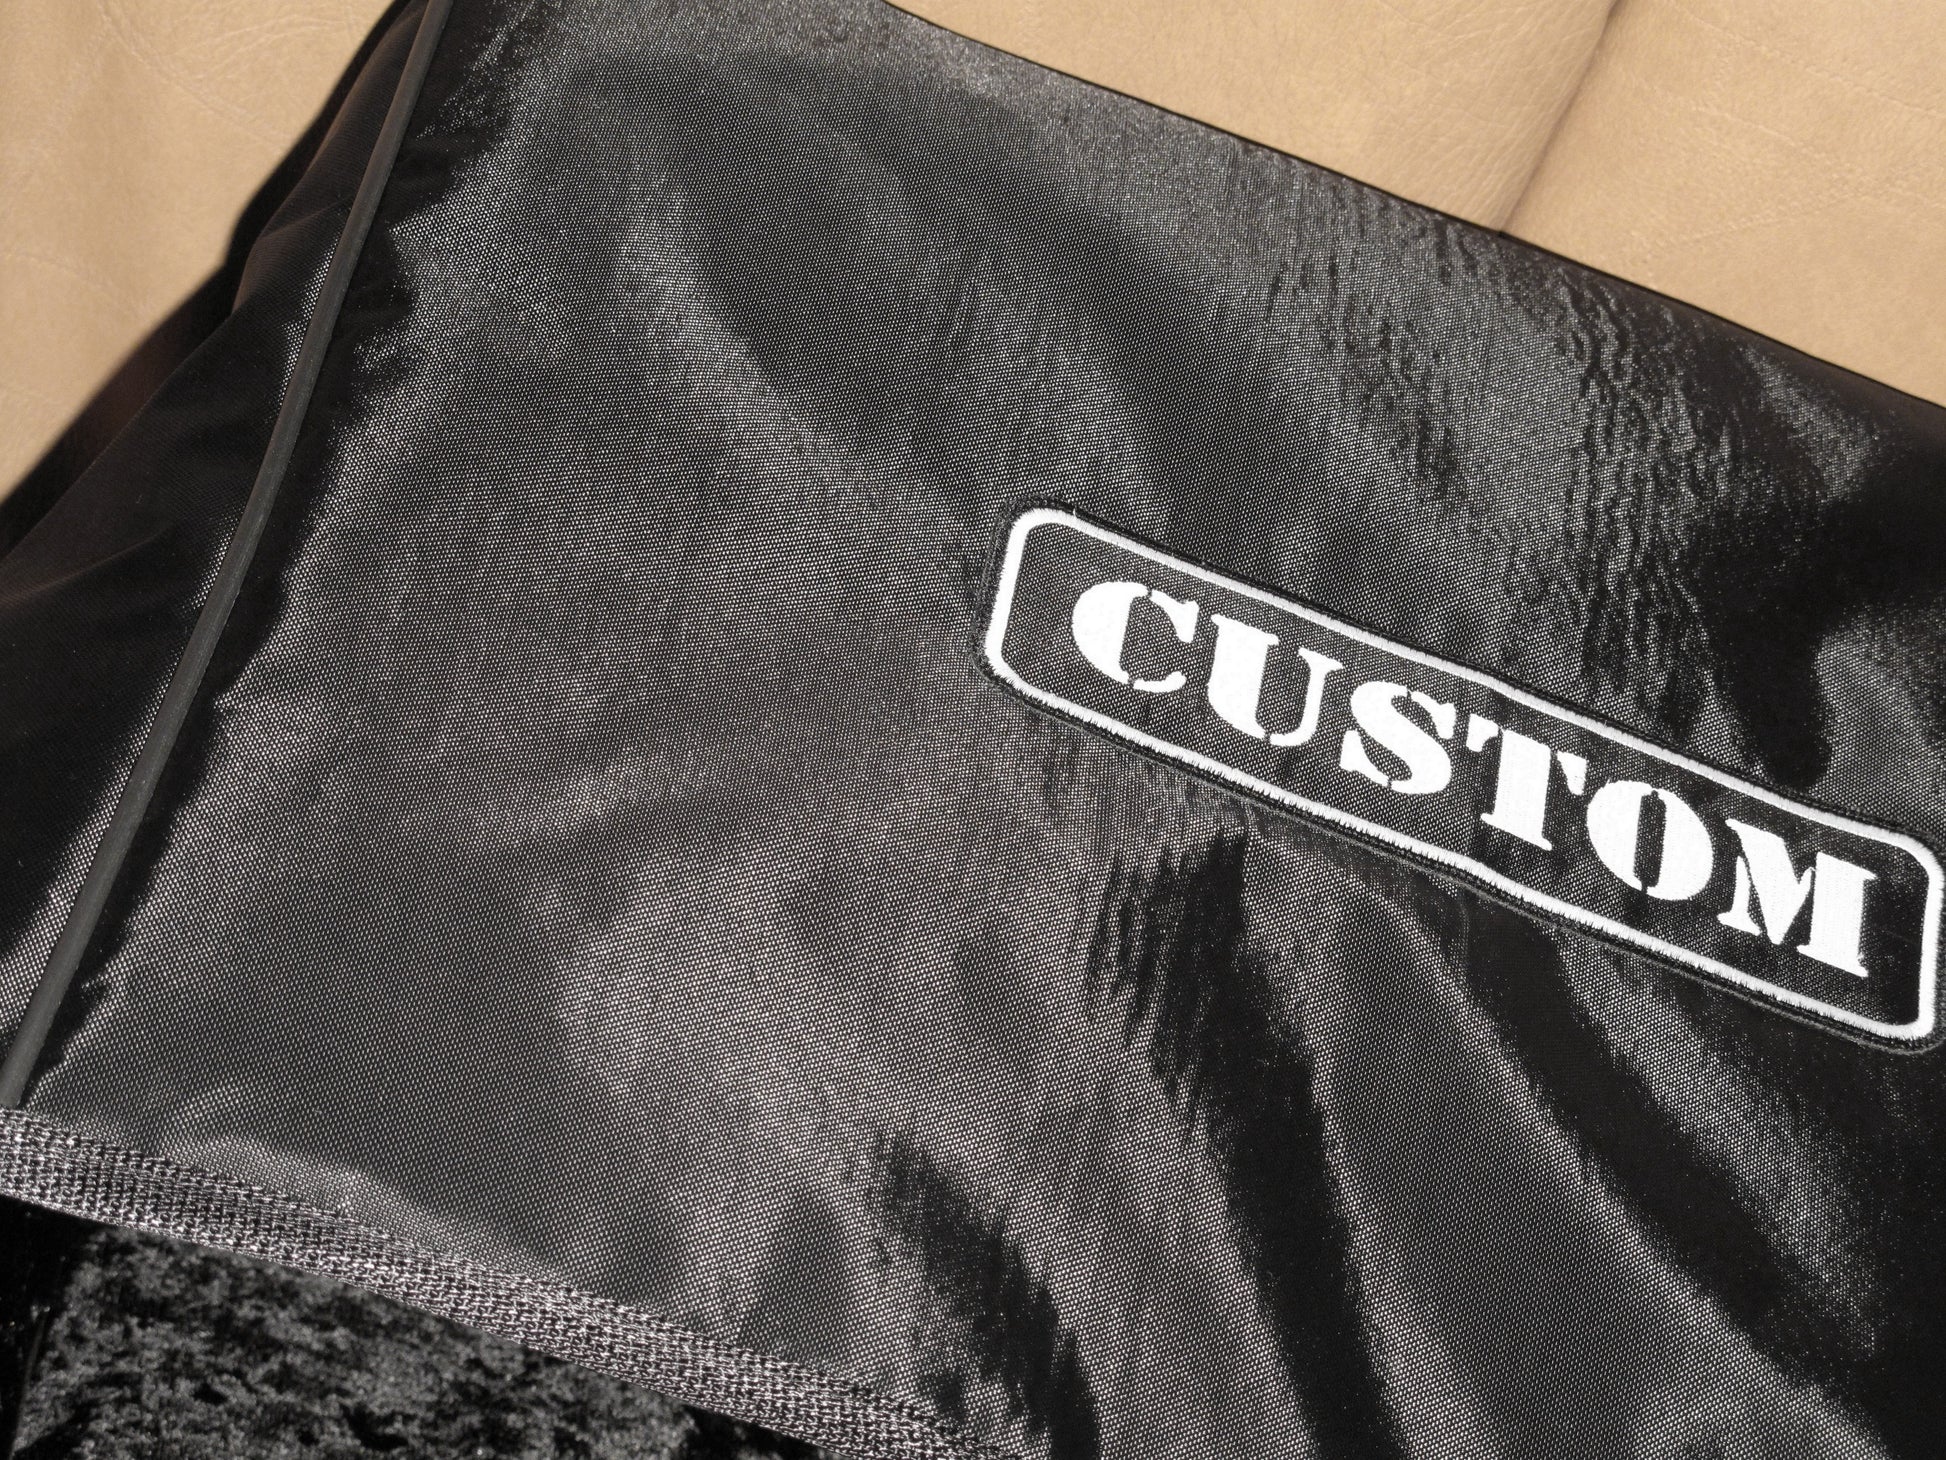 Custom padded high quality handmade cover for FENDER Supersonic 60 1x12" combo amp - super sonic embroidered logo "custom"